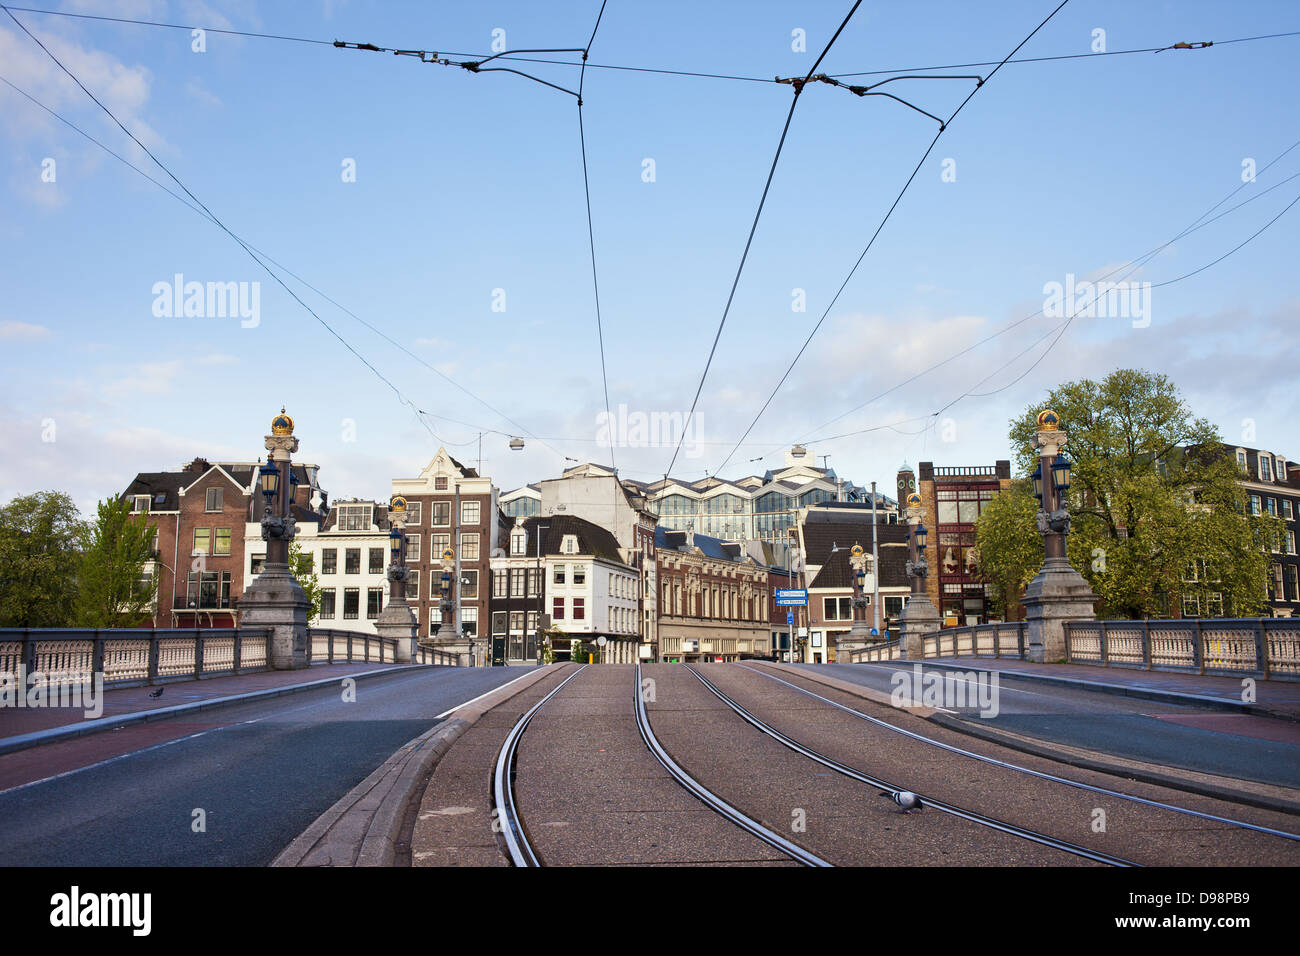 Des infrastructures de transport dans la ville d'Amsterdam en Hollande, street et tramway sur le pont (Hogesluis Hoge Brug Sluis). Banque D'Images